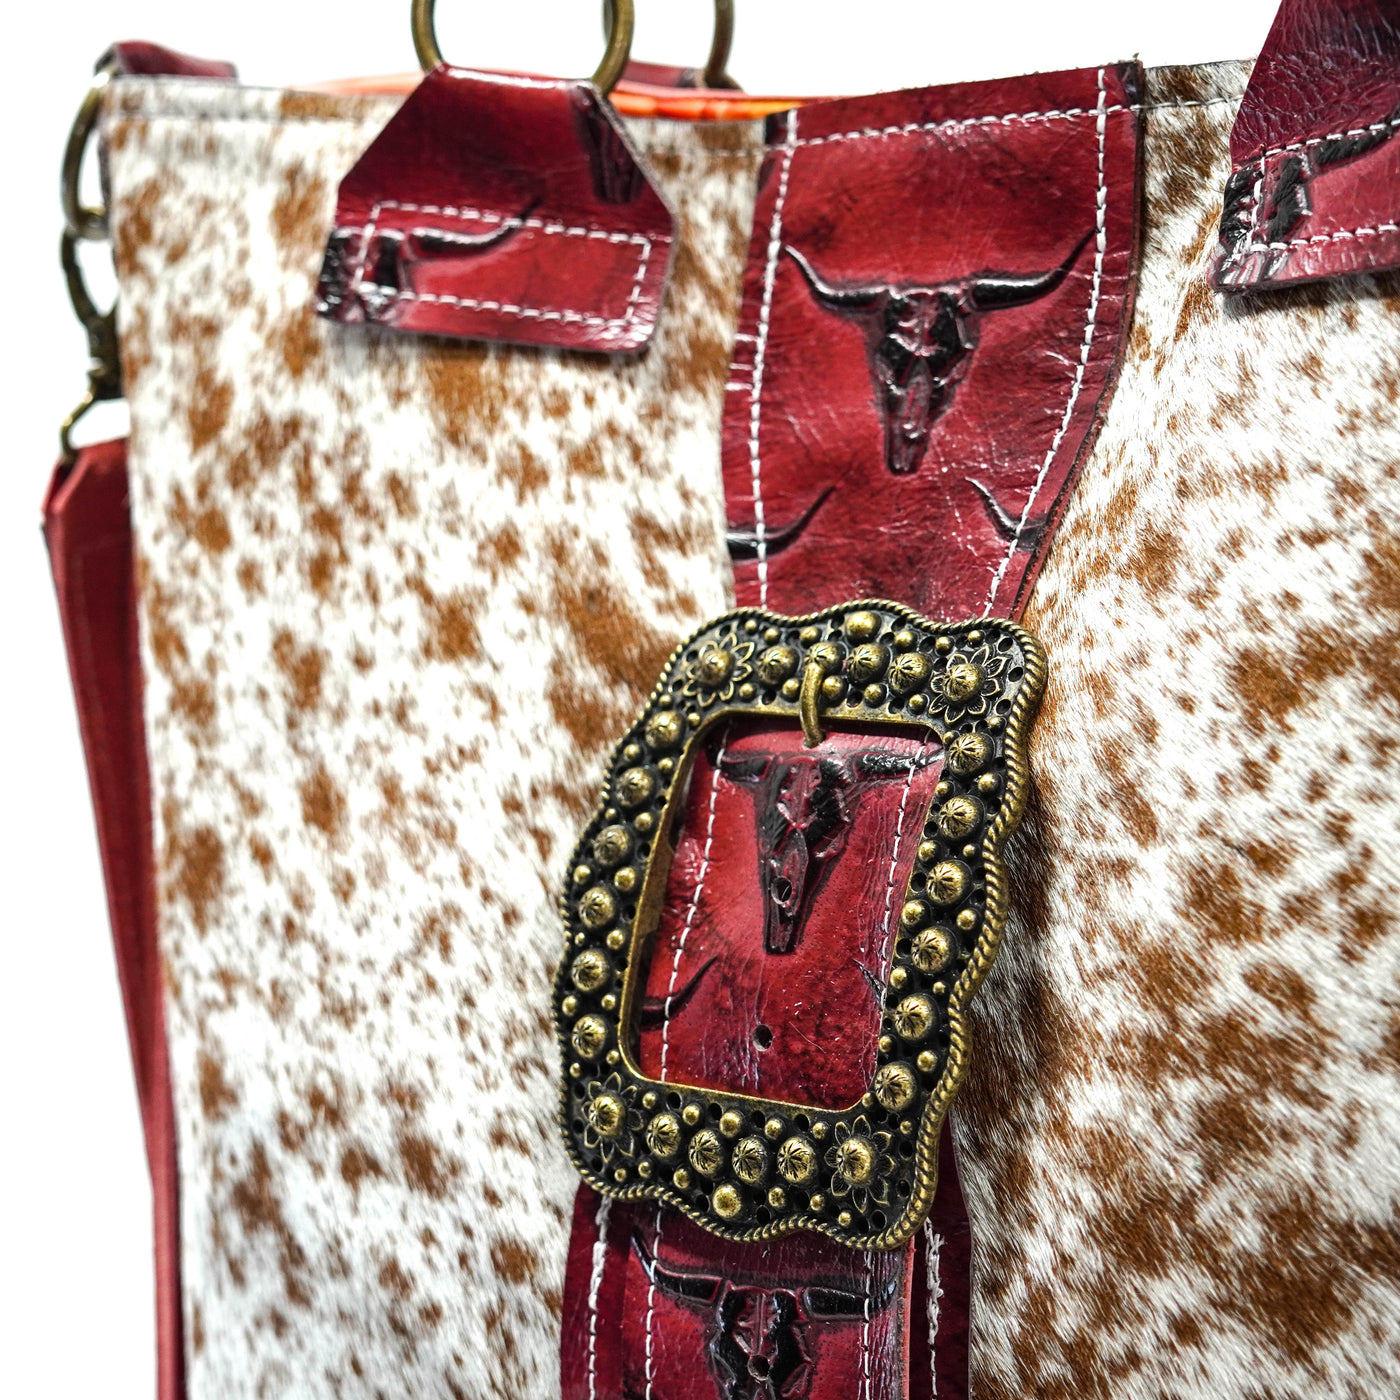 Taylor - Speckled Longhorn w/ Burgundy Skulls-Taylor-Western-Cowhide-Bags-Handmade-Products-Gifts-Dancing Cactus Designs